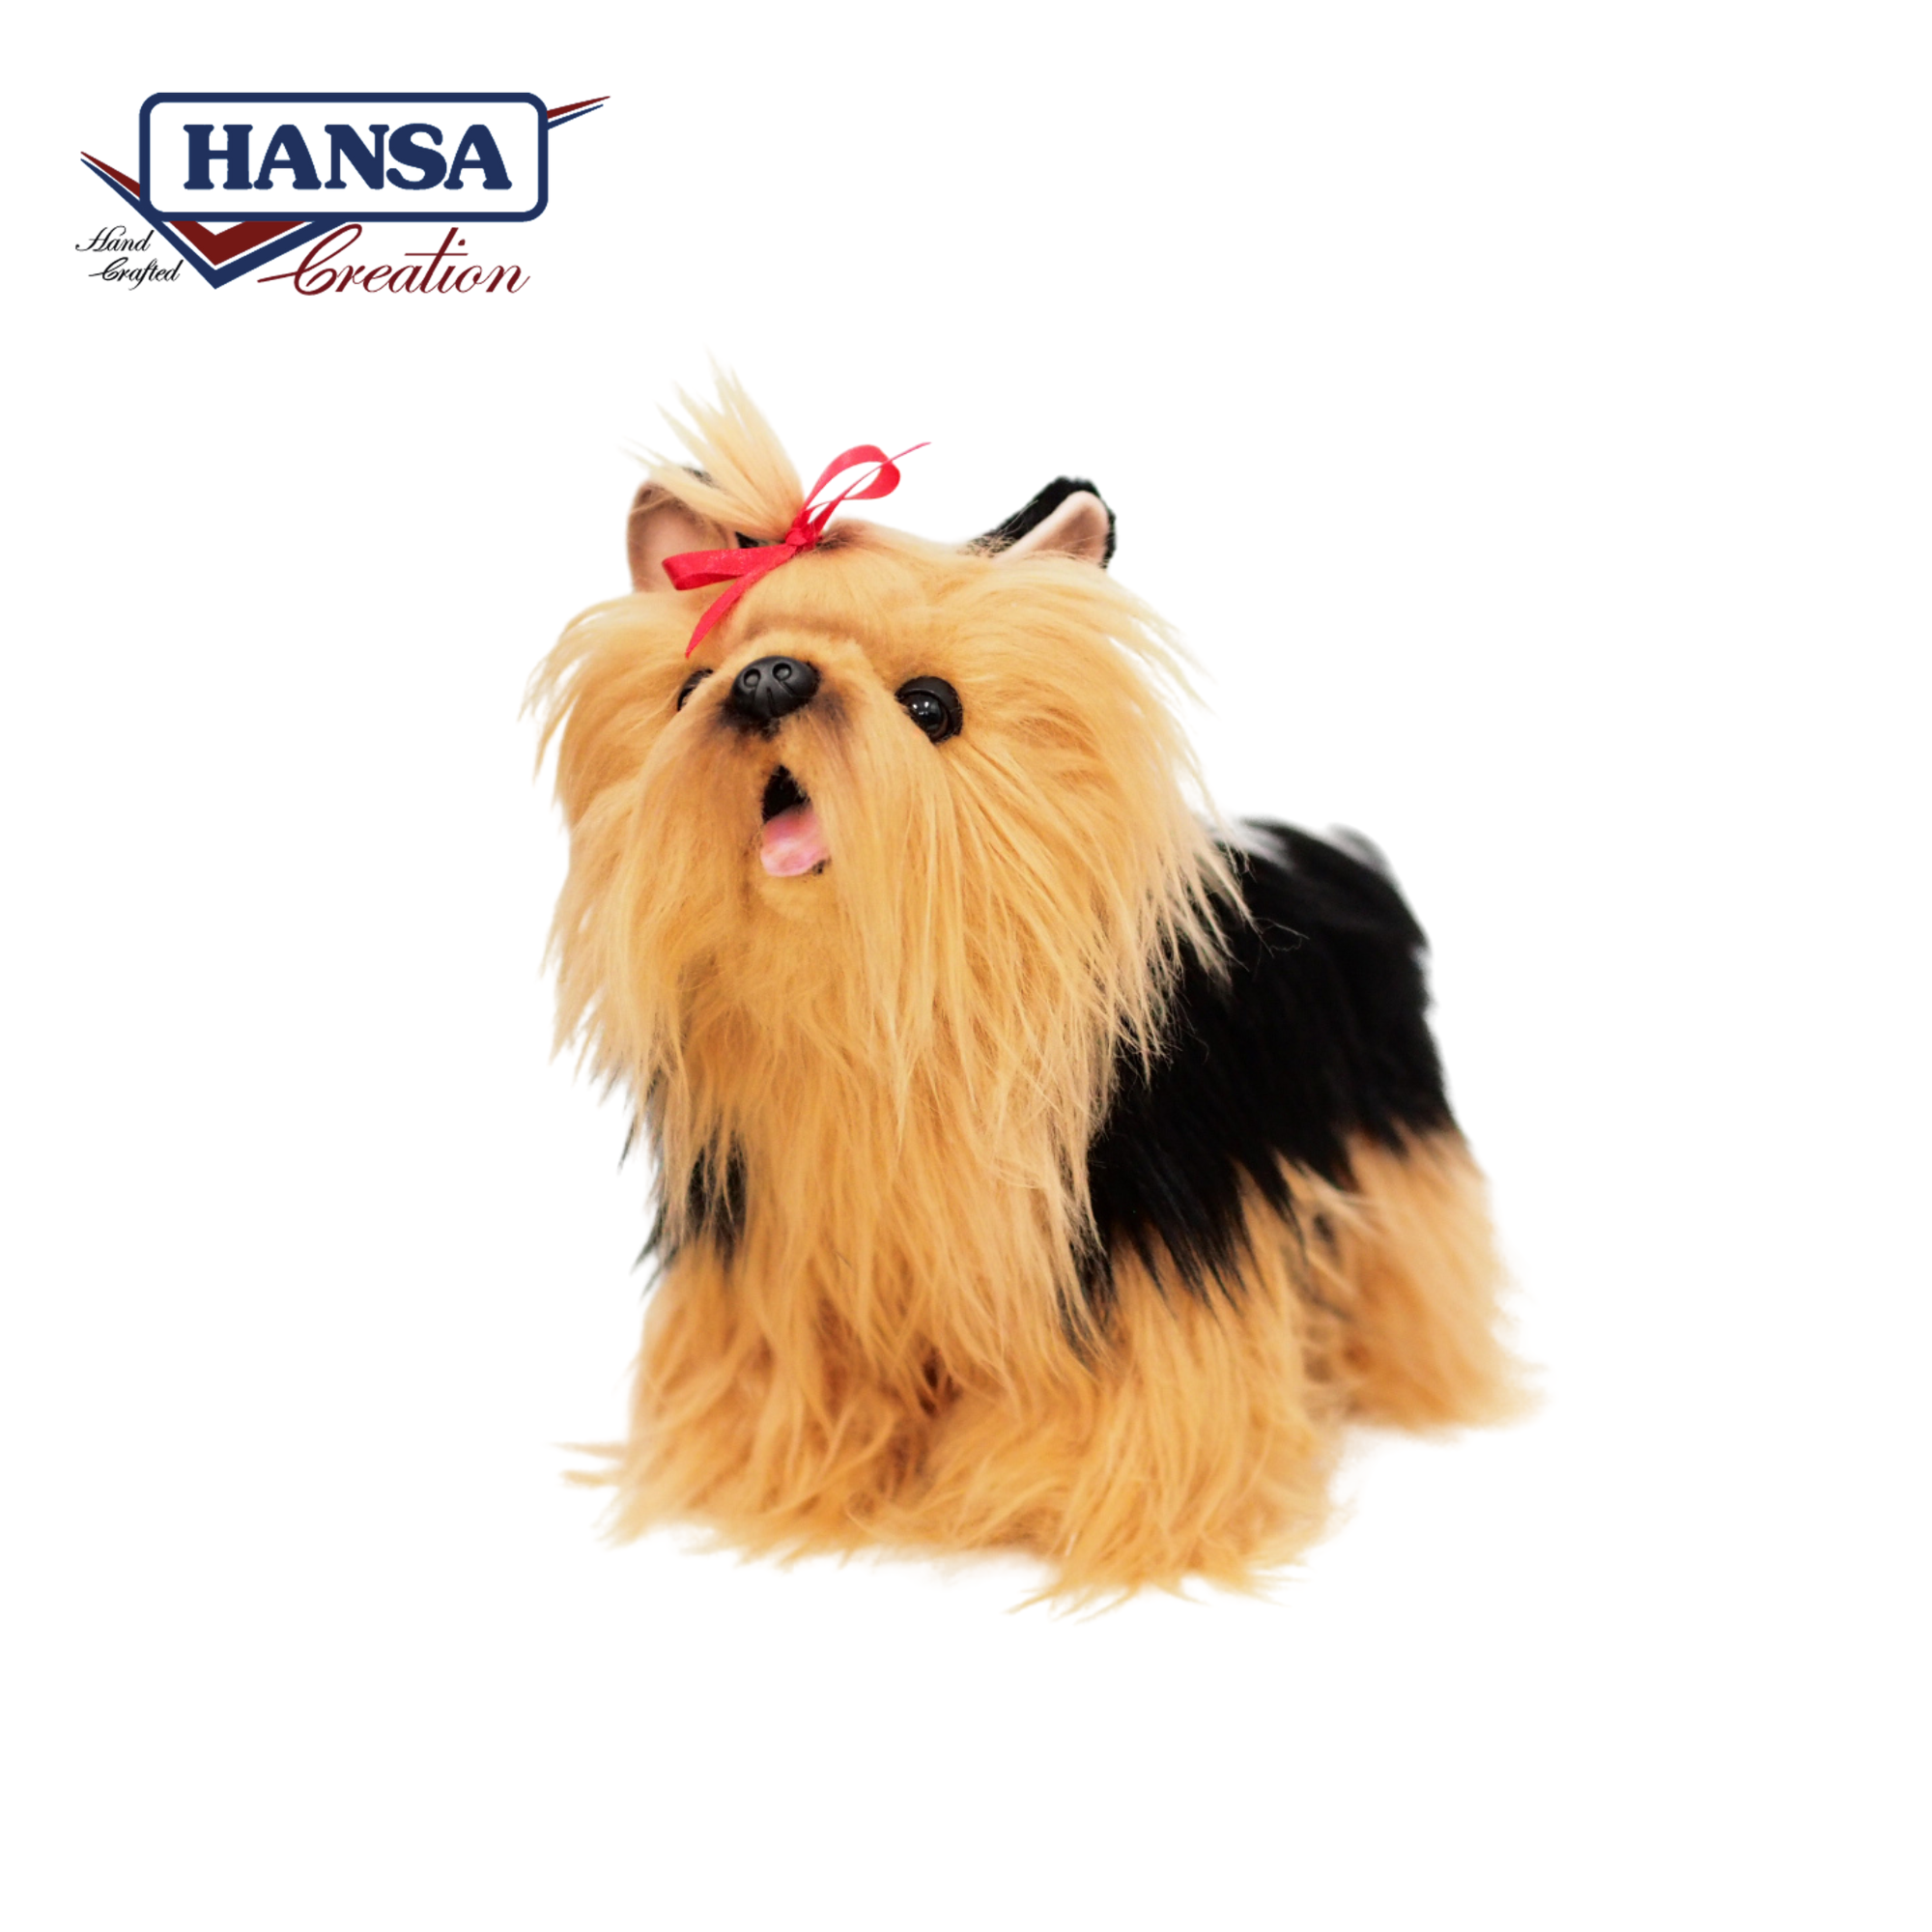 Hansa Yorkshire Terrier Plush